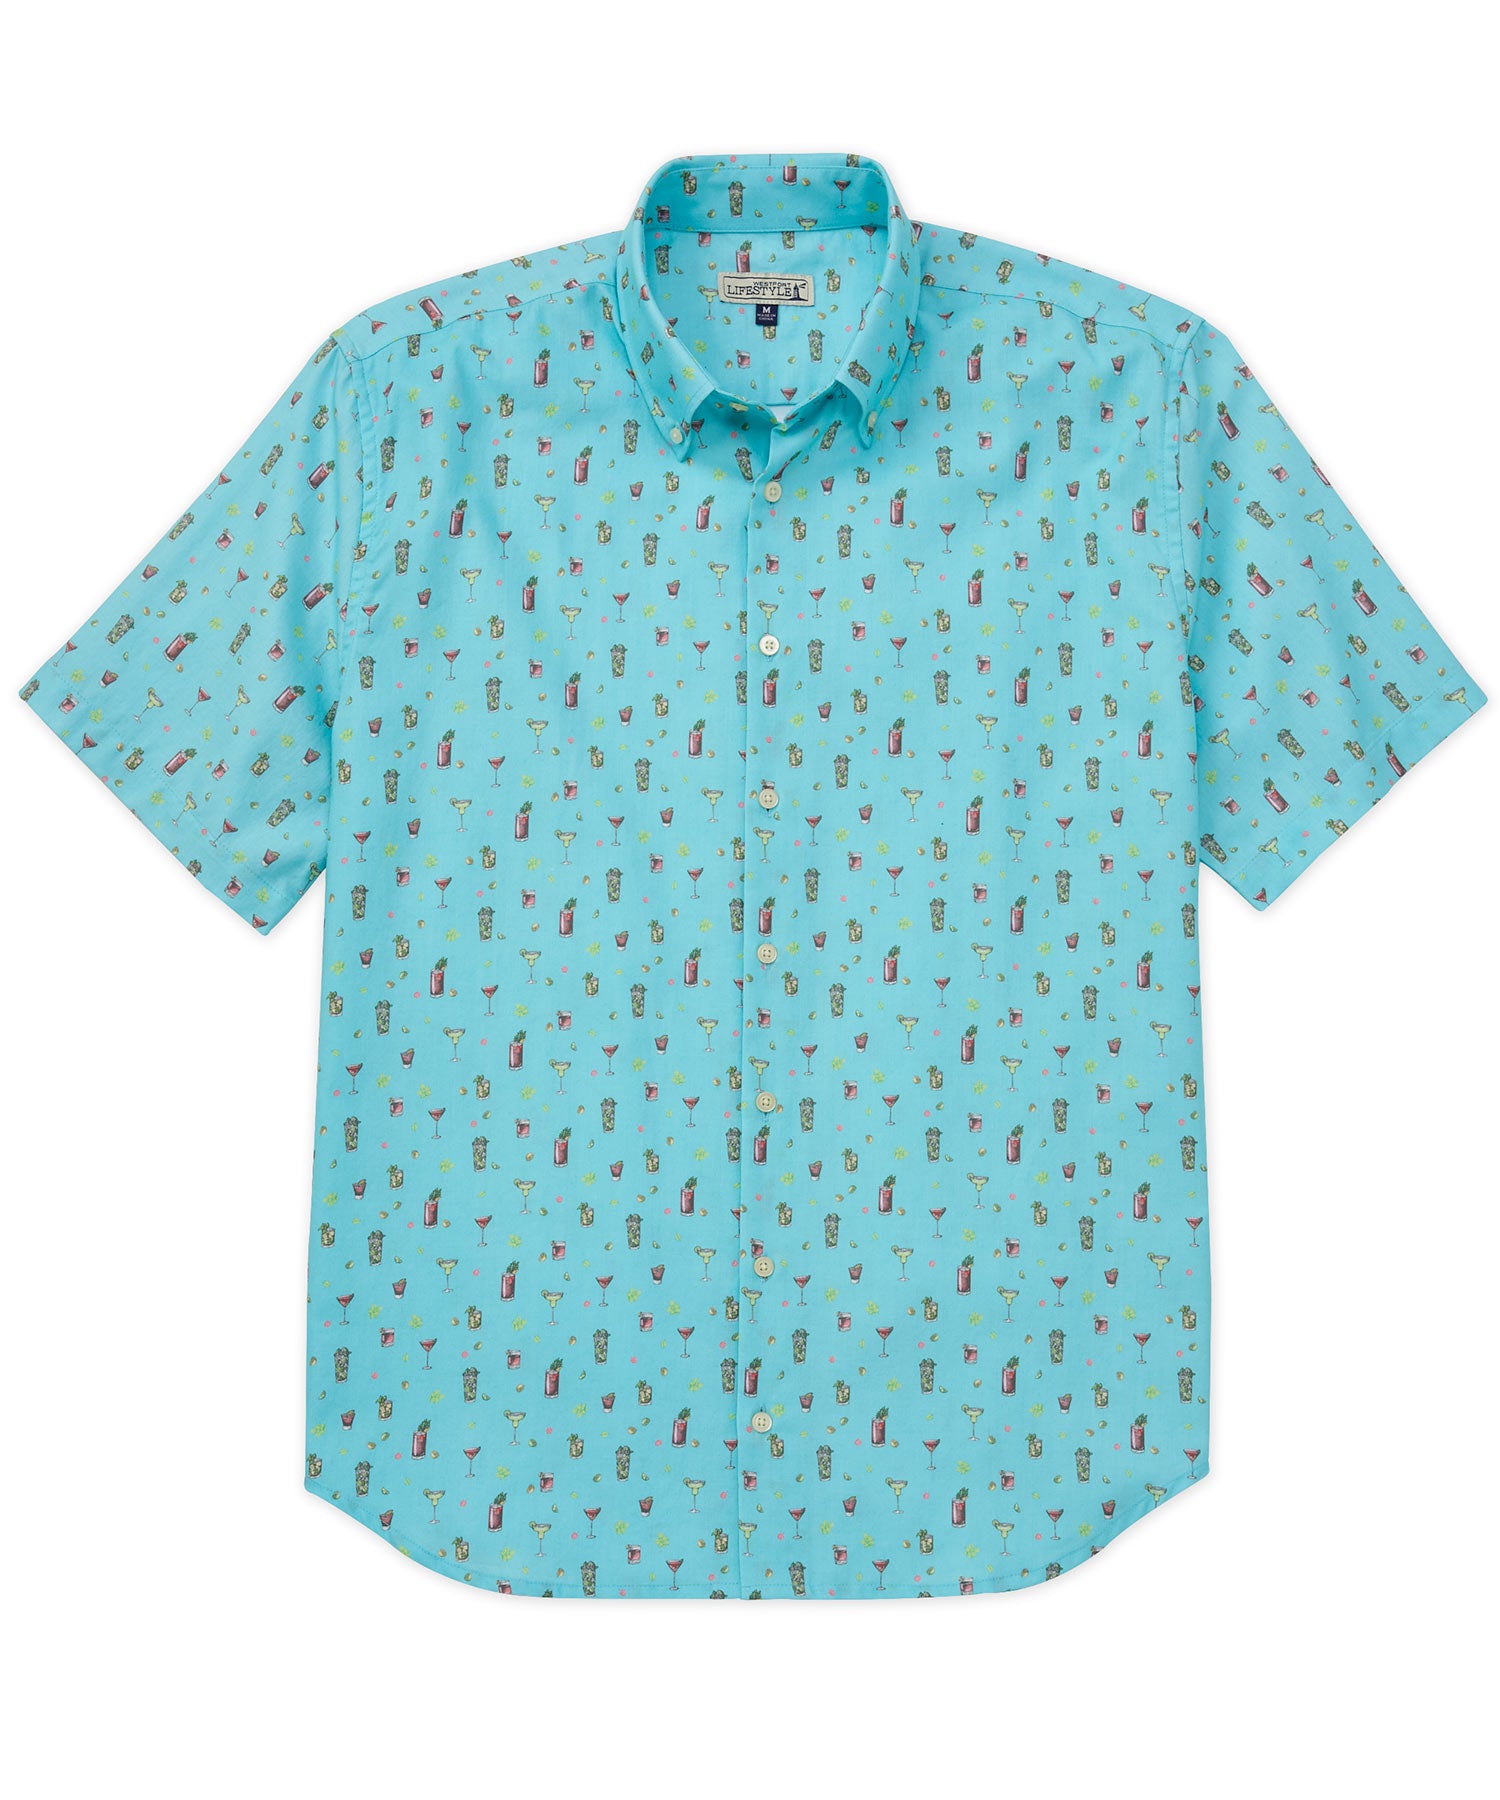 Westport Lifestyle Short Sleeve Cocktail Print Sport Shirt, Men's Big & Tall